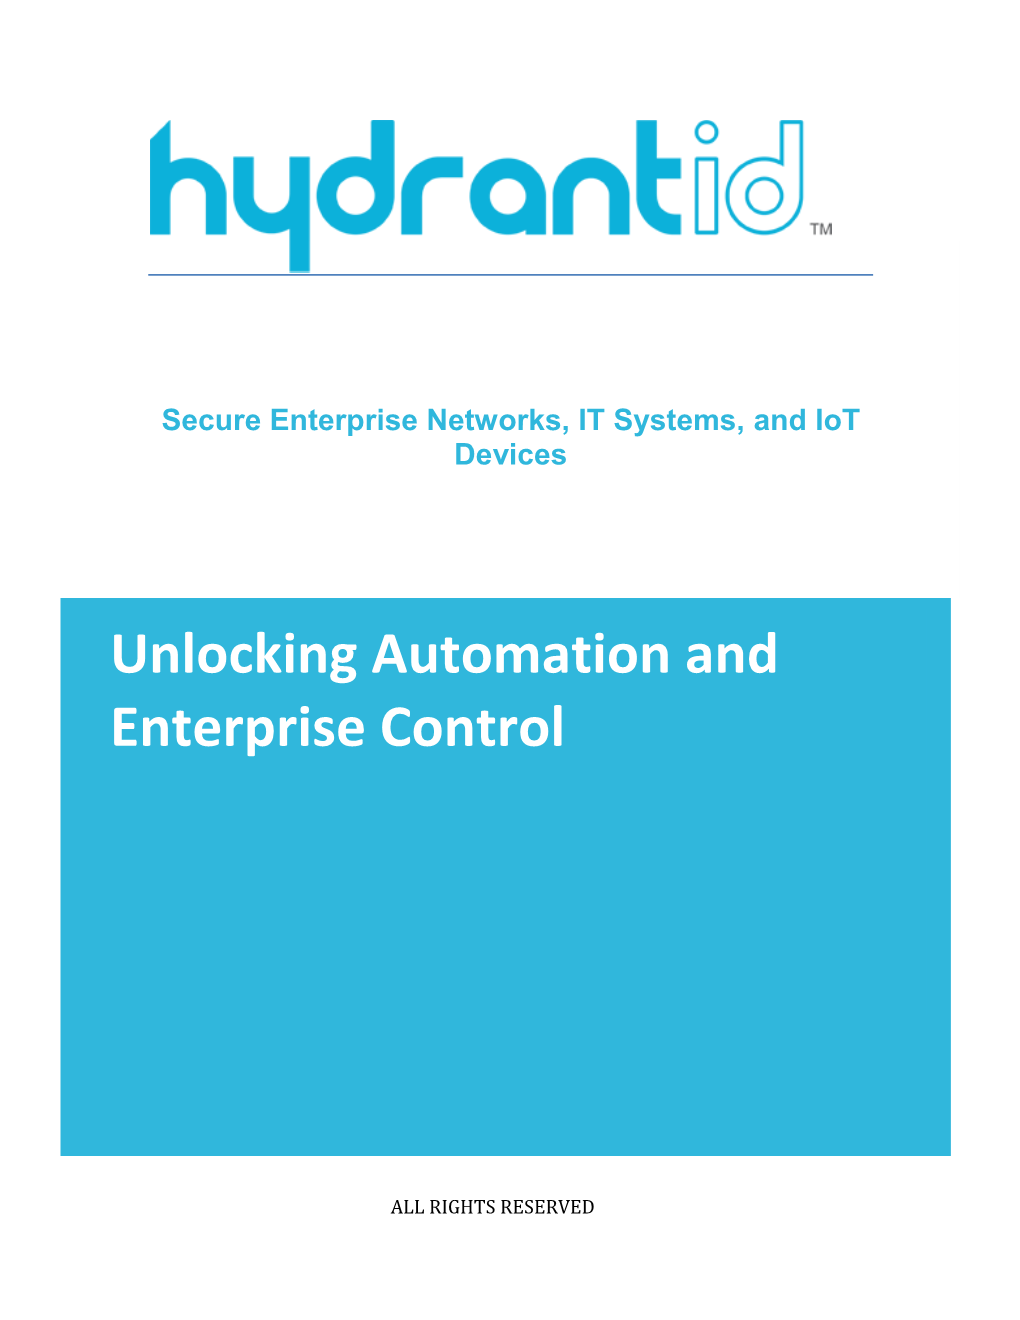 Unlocking Automation and Enterprise Control